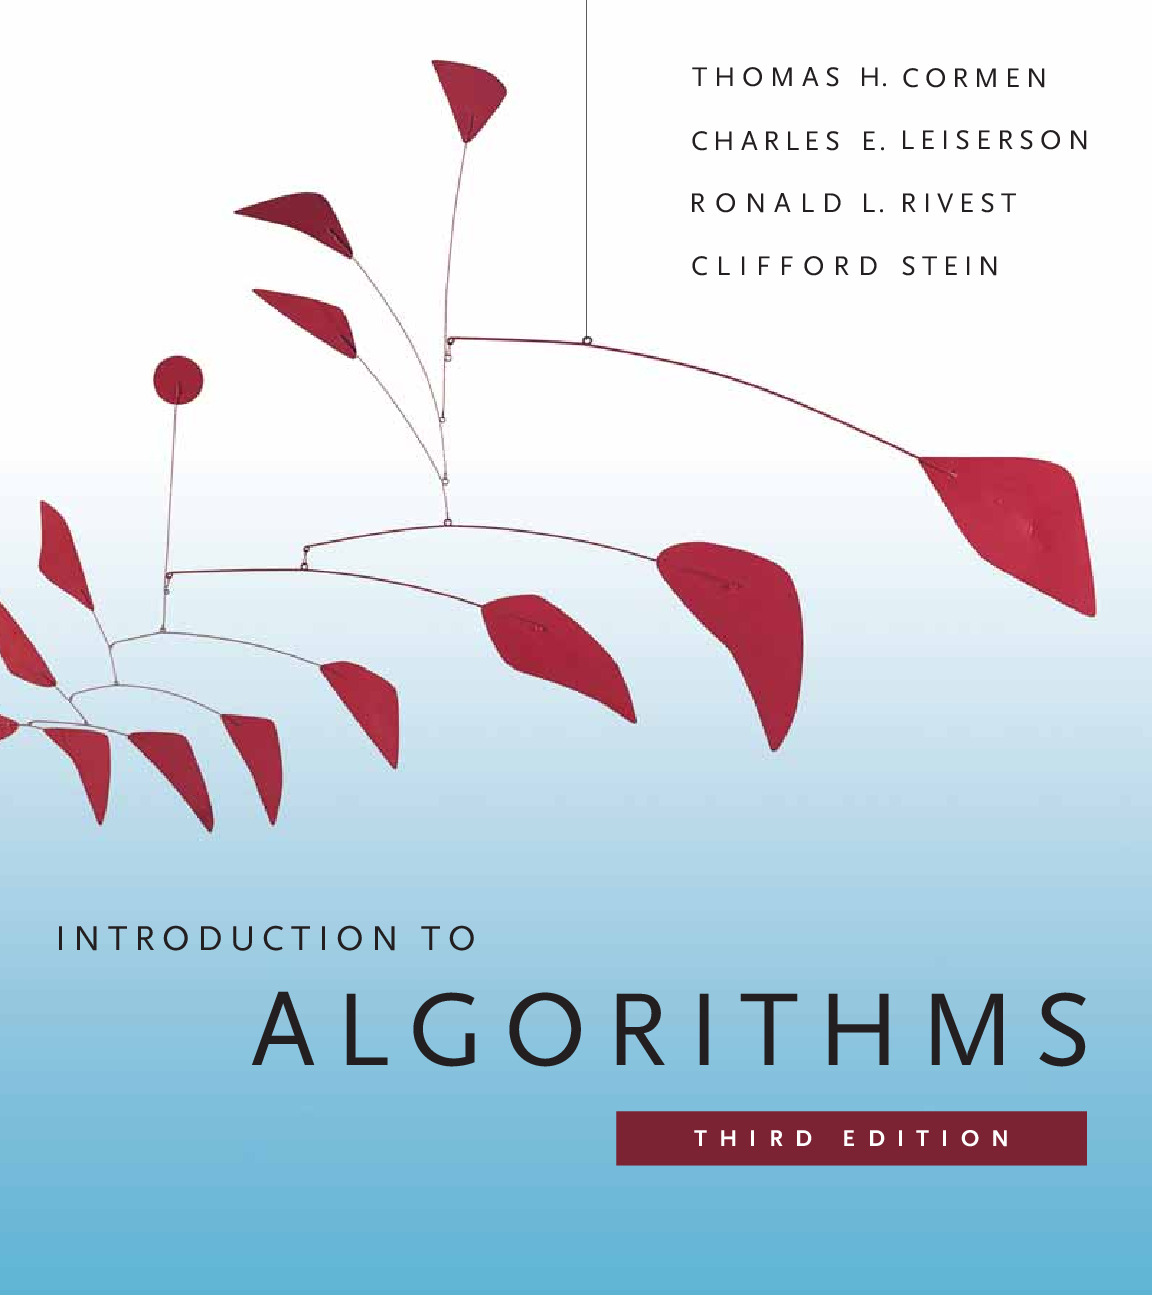 Introduction to Algorithms by Thomas H. Cormen